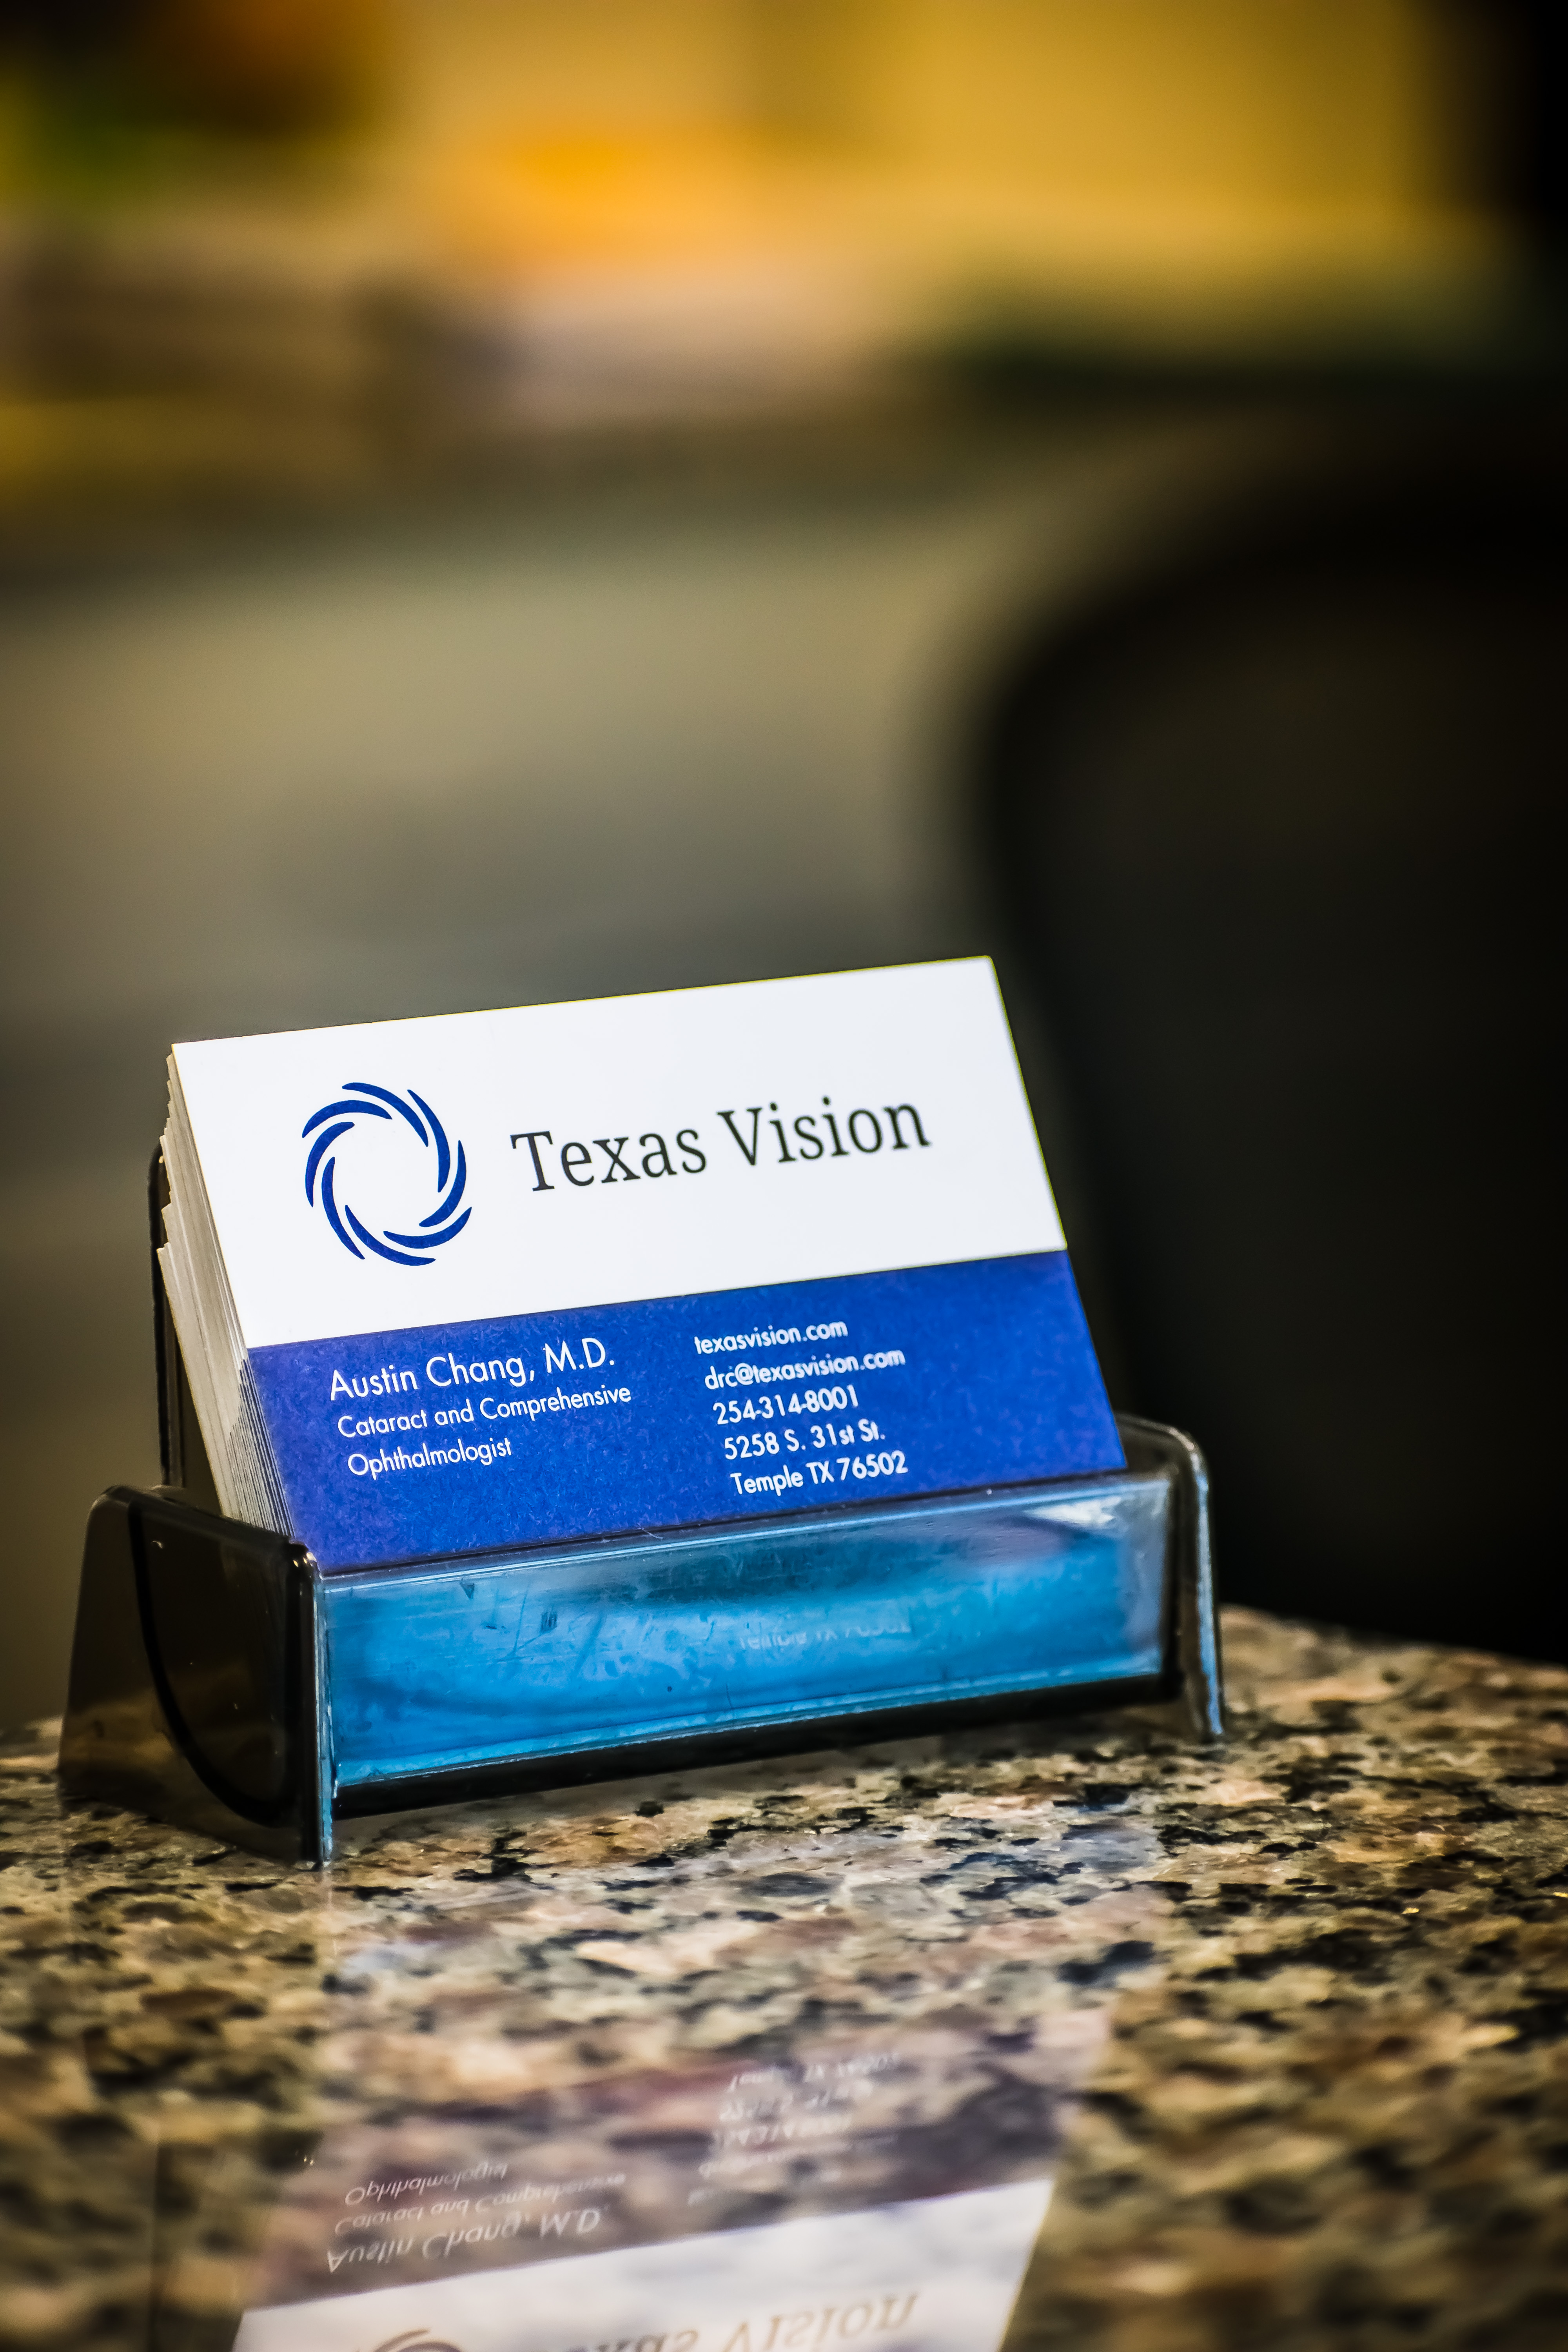 Texas Vision: Austin Chang M.D. Photo